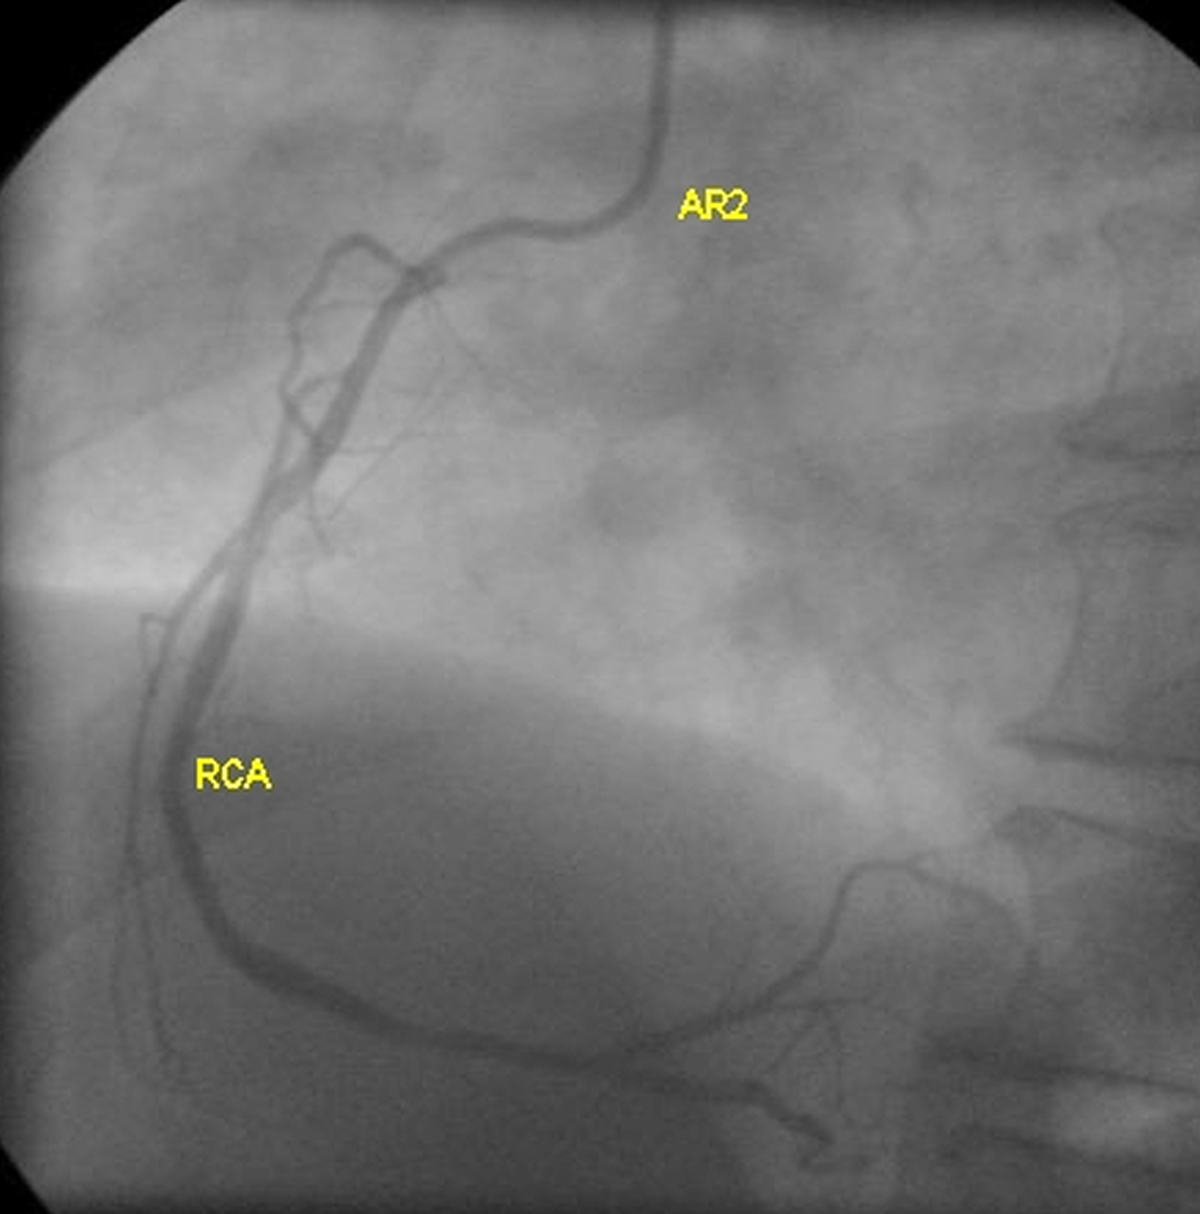 Right coronary angiogram in LAO cranial view using Amplatz RCA catheter